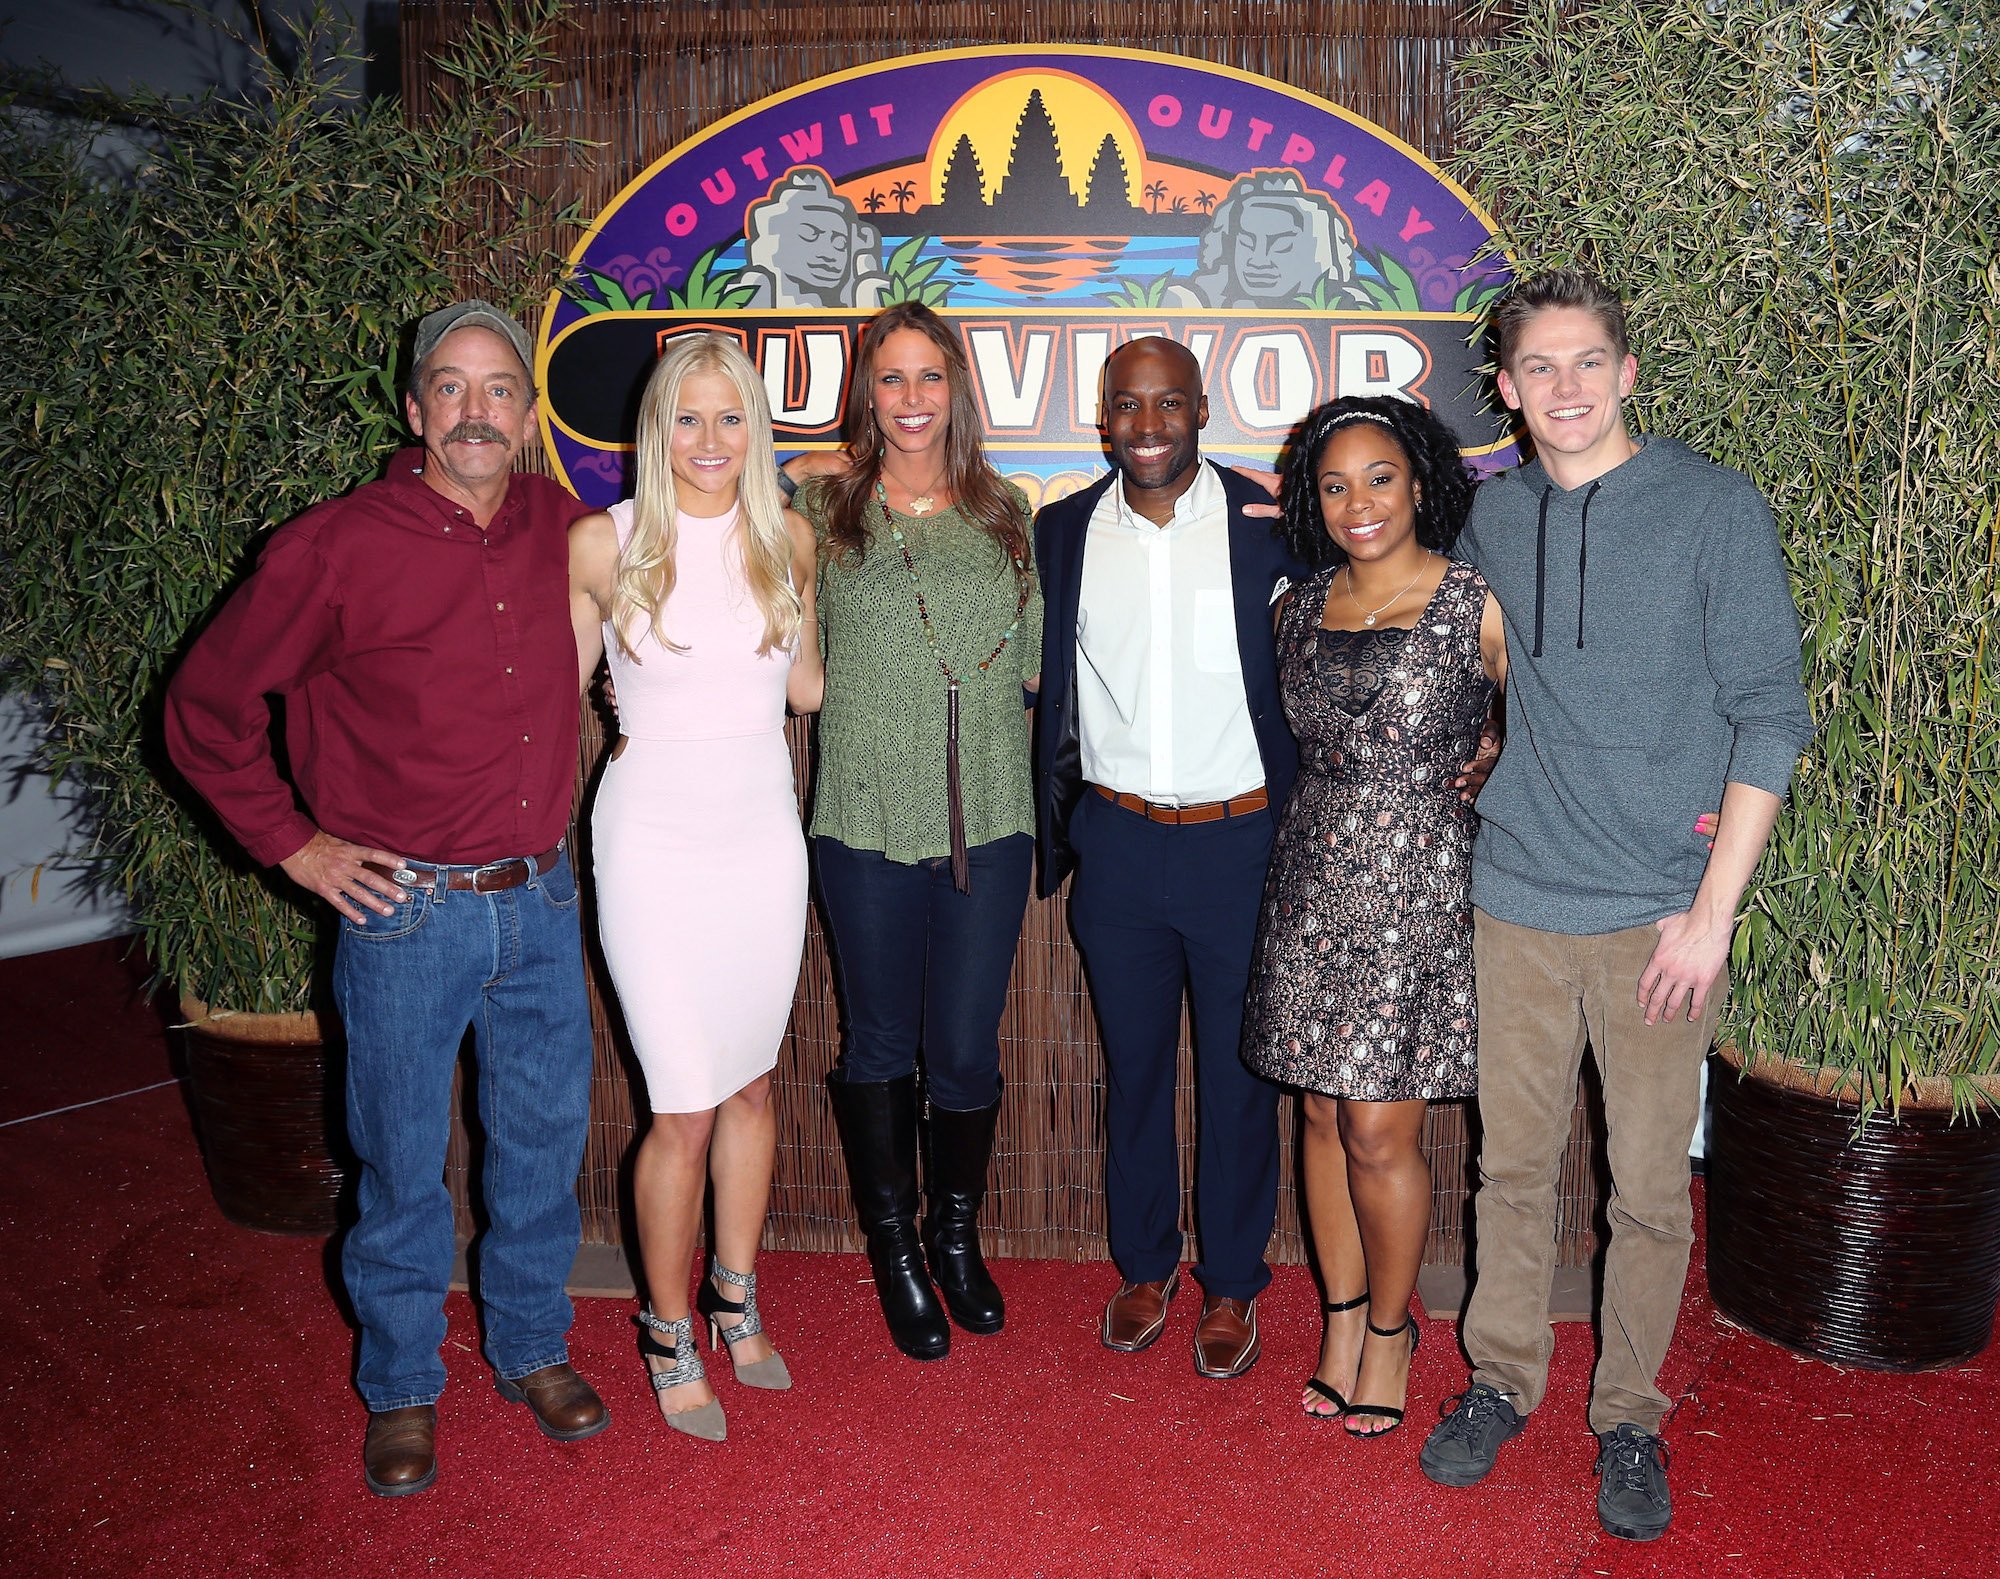 (L-R) Contestants Keith Nale, Kelley Wentworth, Kimmi Kappenberg, Jeremy Collins, Latasha "Tasha" Fox and Spencer Bledsoe smiling in front of a 'Survivor' logo